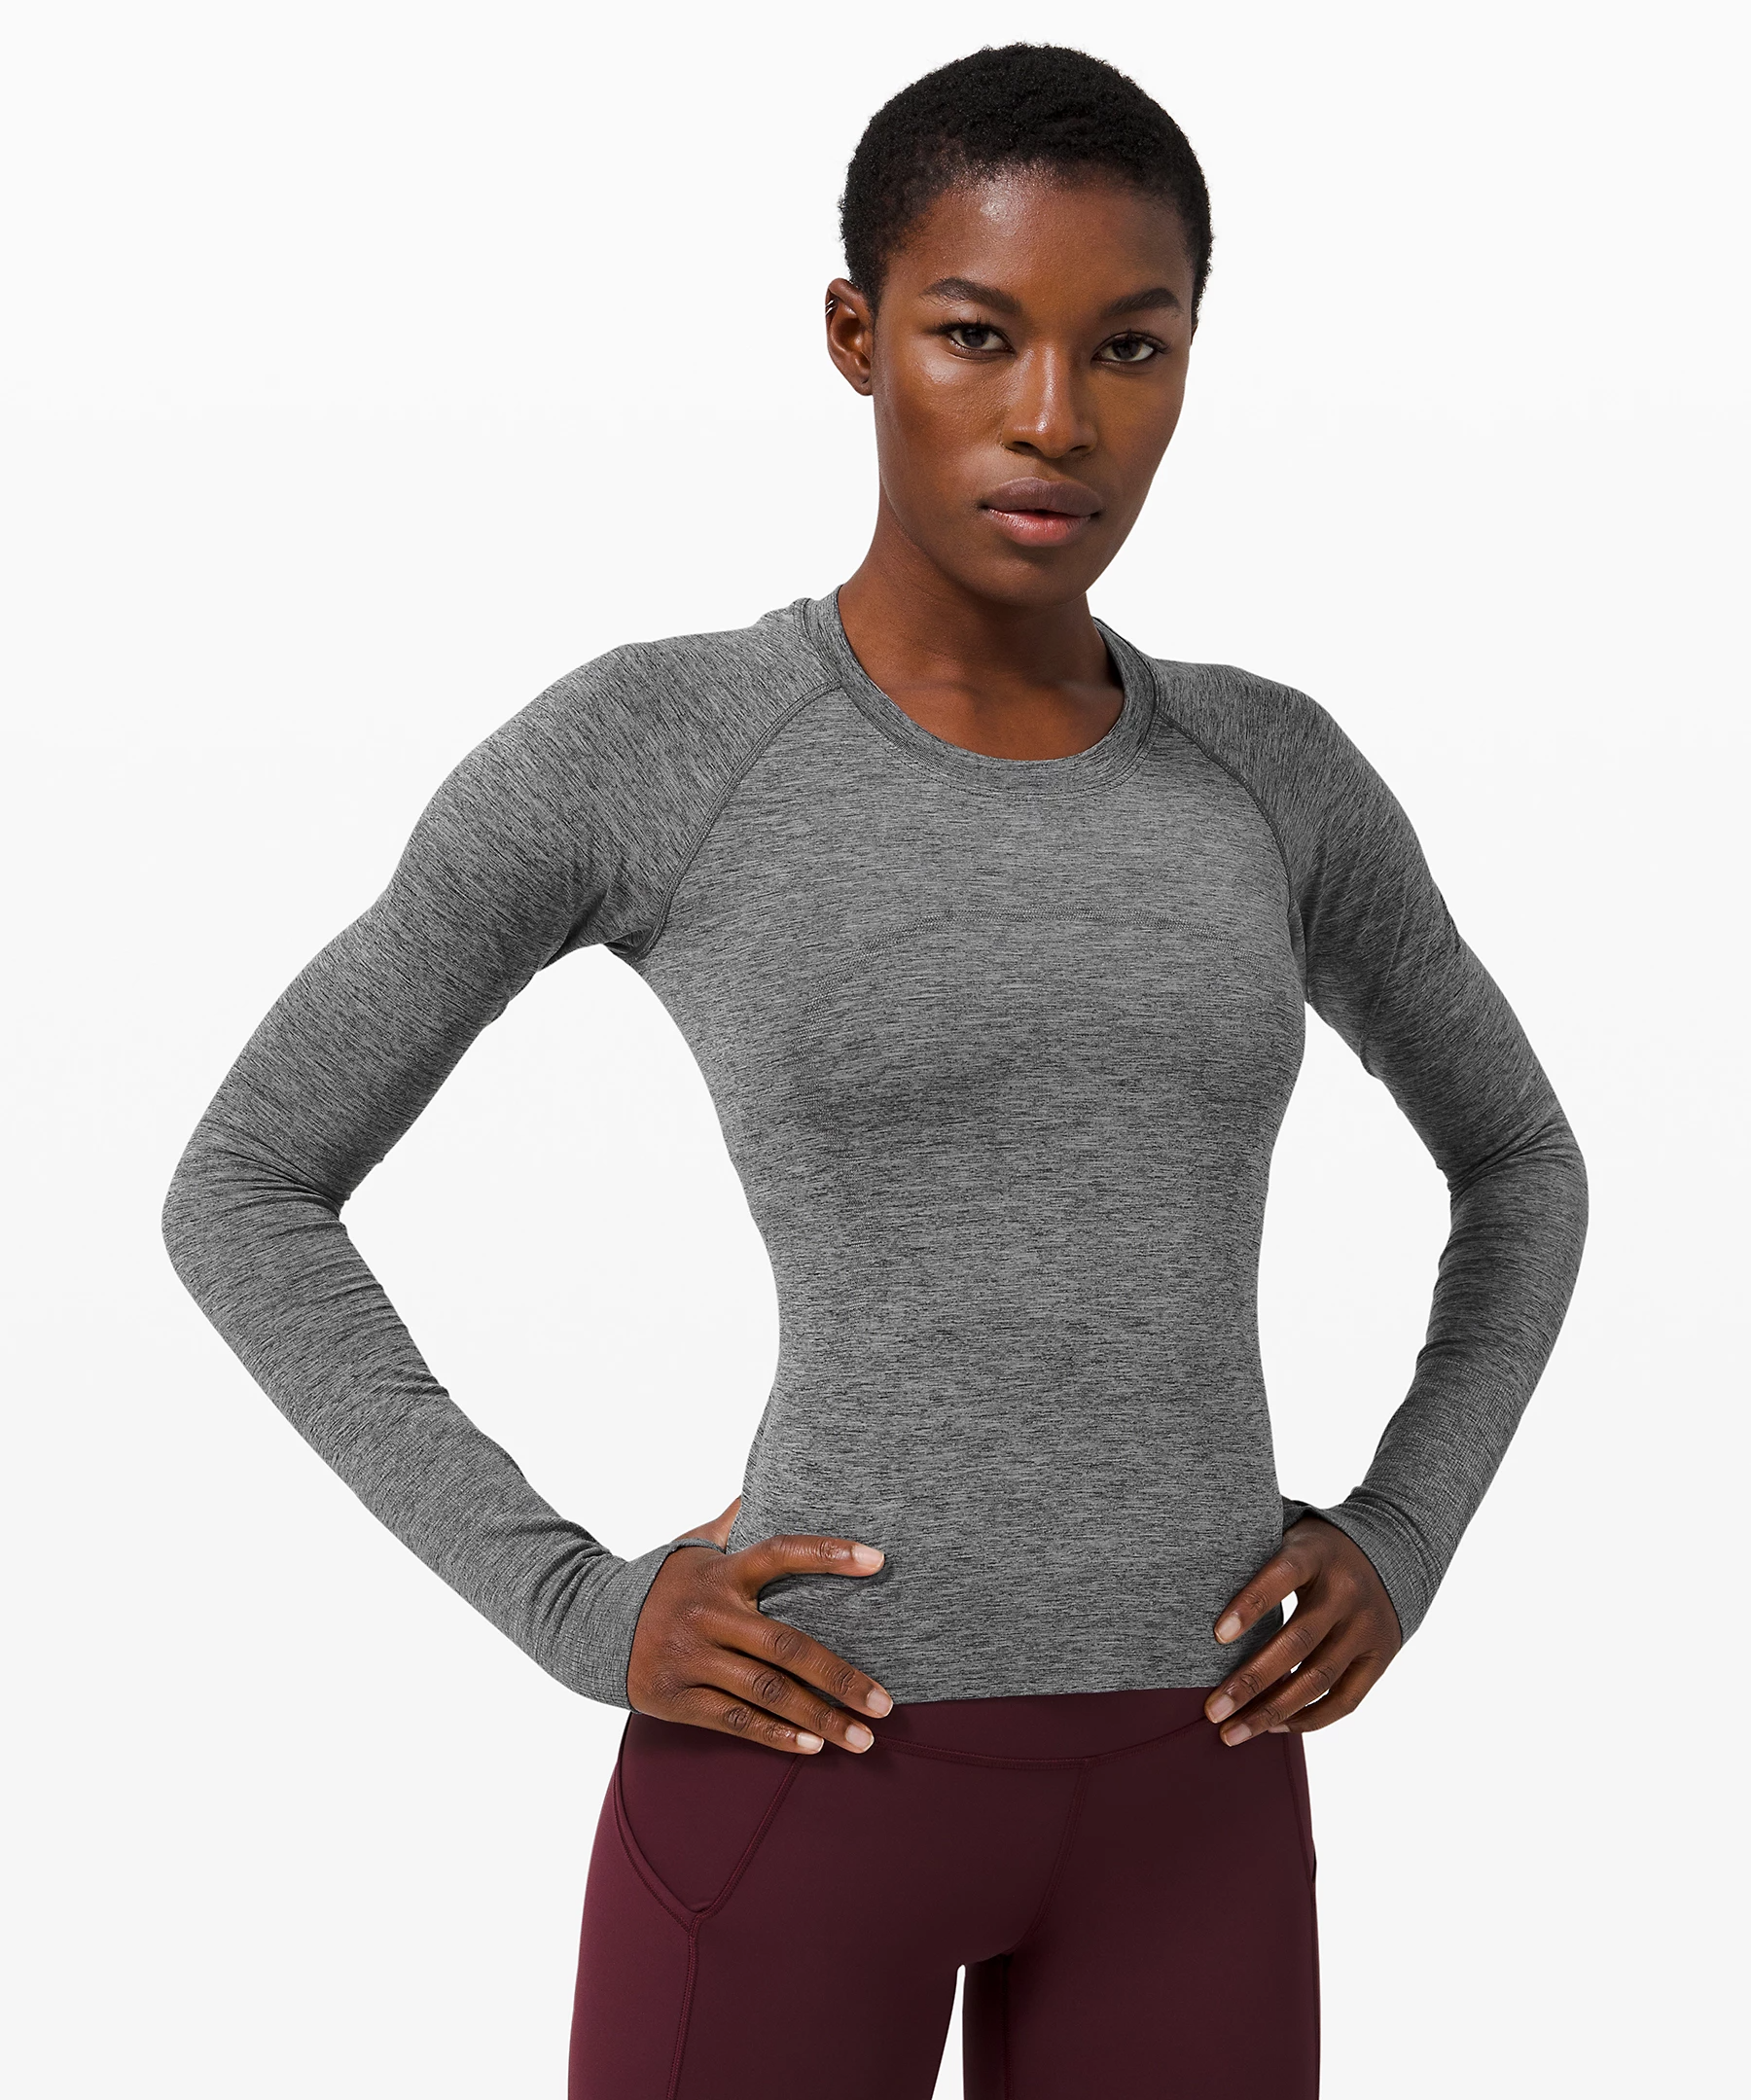 Muzniuer Long Sleeve Workout Tops for Women-Plain Long Sleeve Shirts Yoga Tops Gym Sports T-Shirt with Thumb Hole 